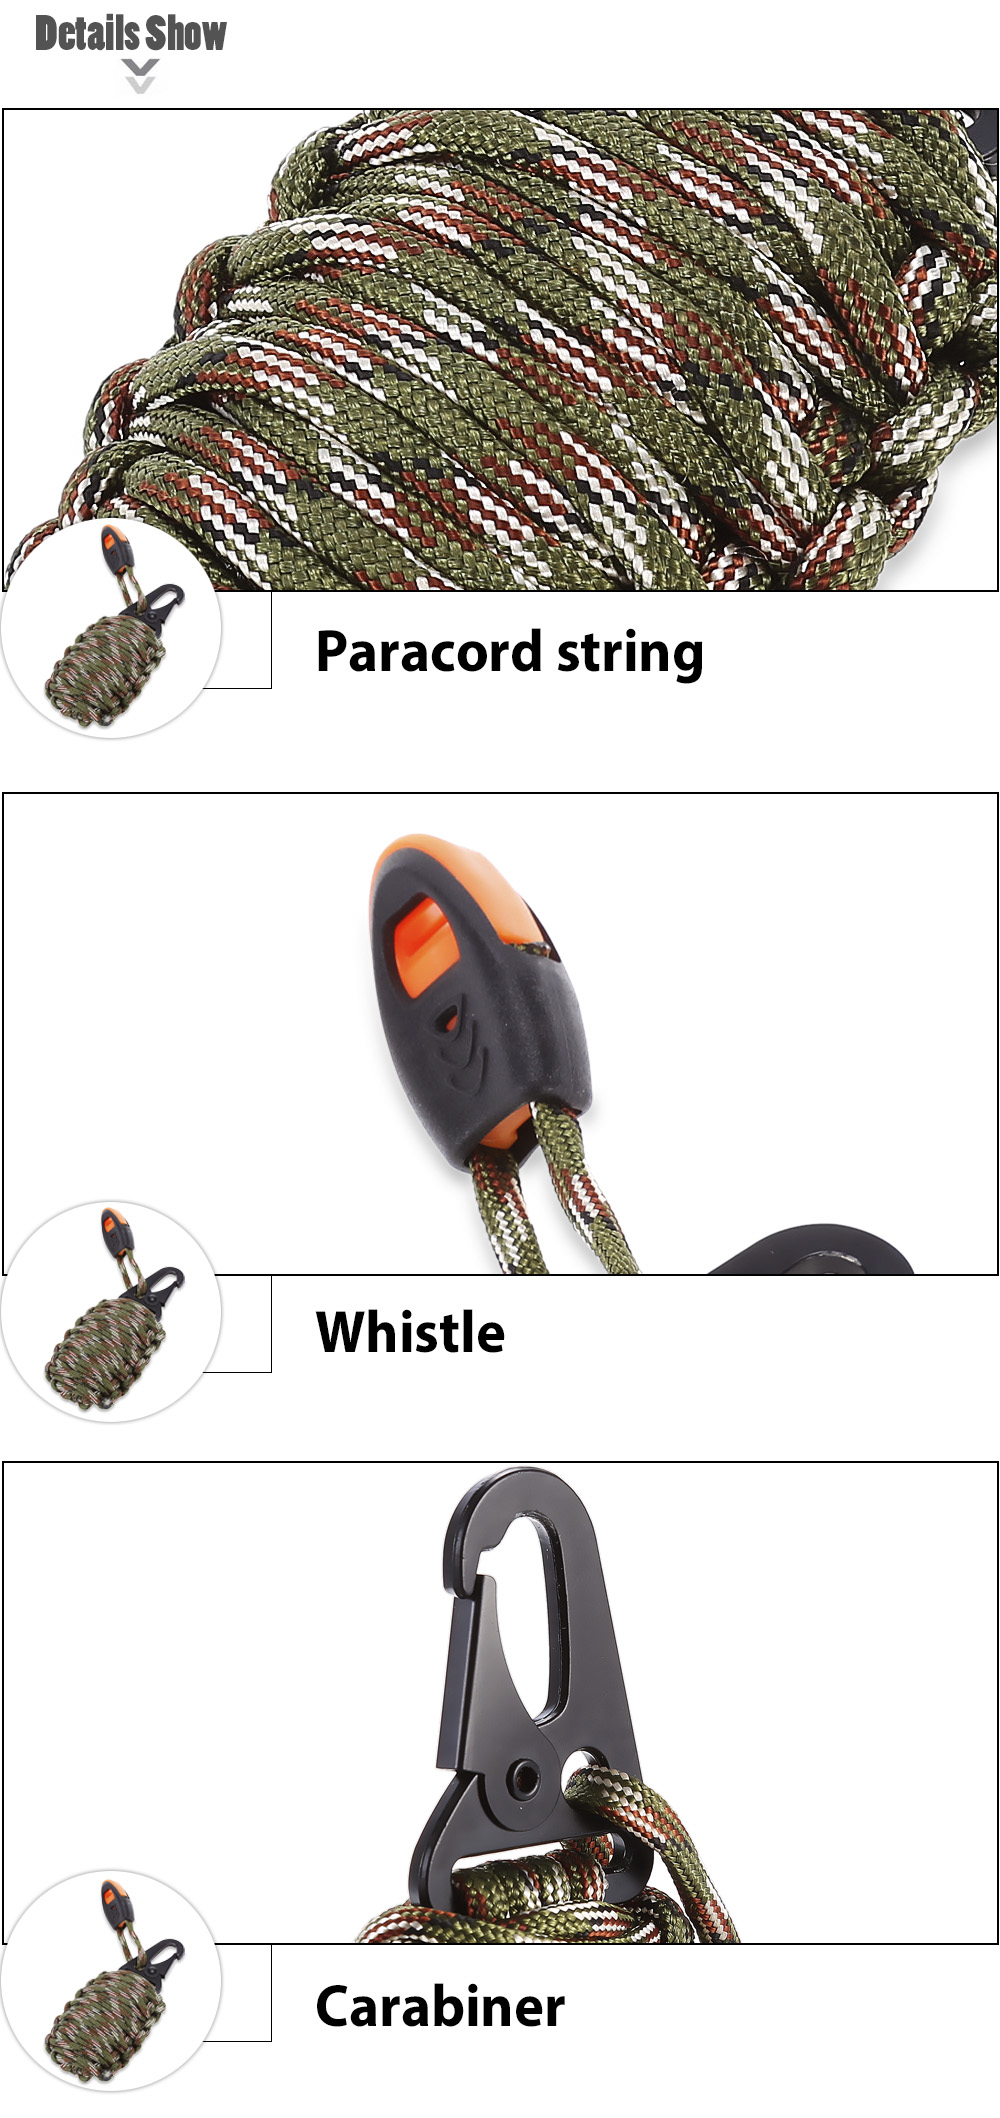 Paracord Grenade Bracelet Keychain Emergency Survival Kit with Carabiner Eye Knife Fire Starter Fishing Tool